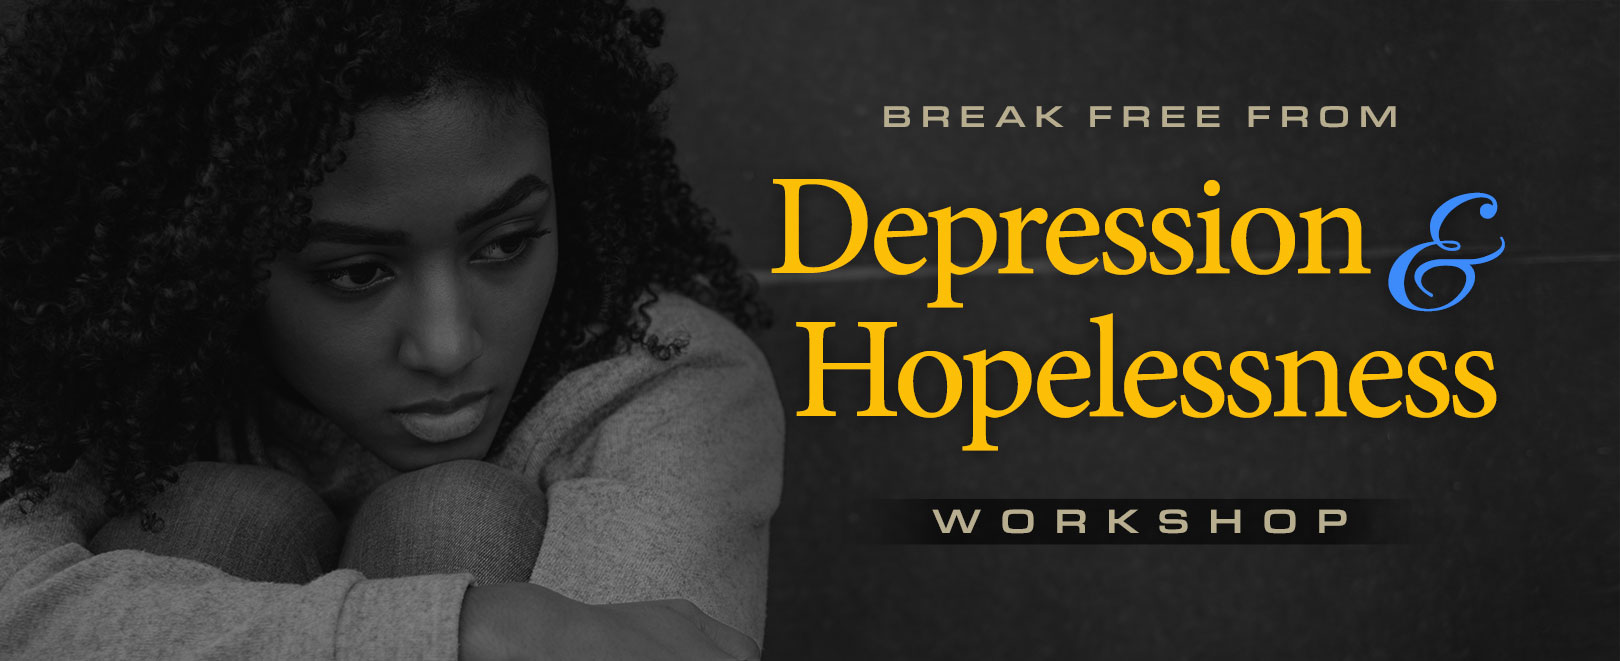 Depression & Hopelessness Workshop